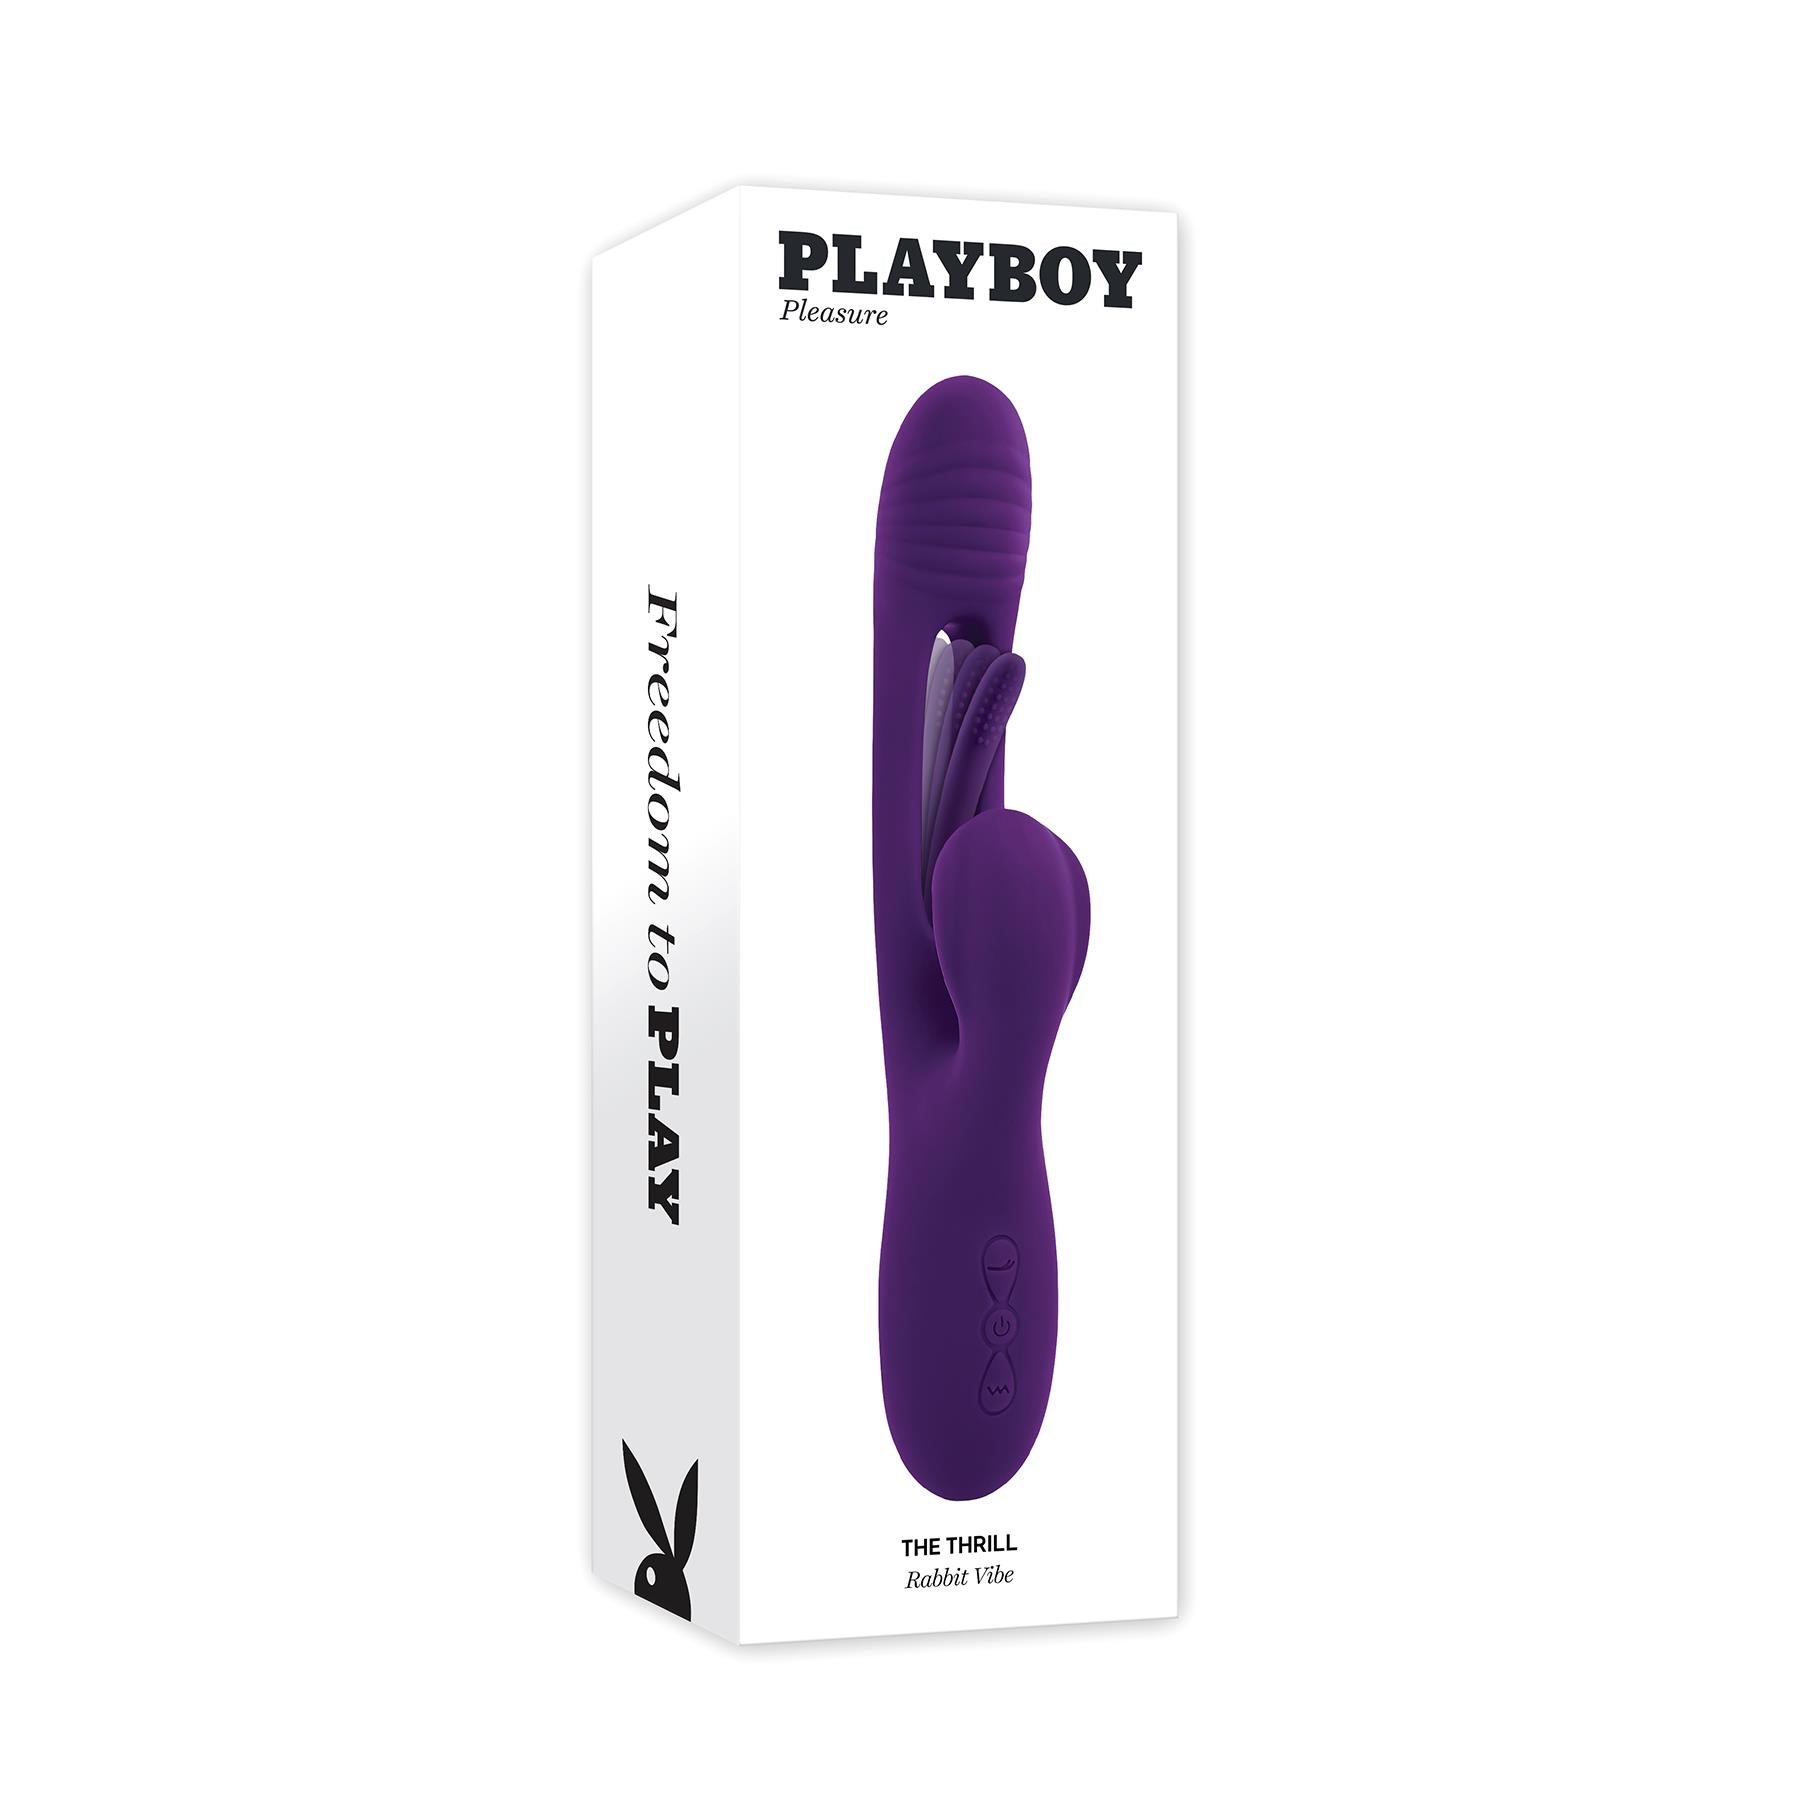 Playboy Pleasure The Thrill Rabbit Vibrator - Packaging Shot